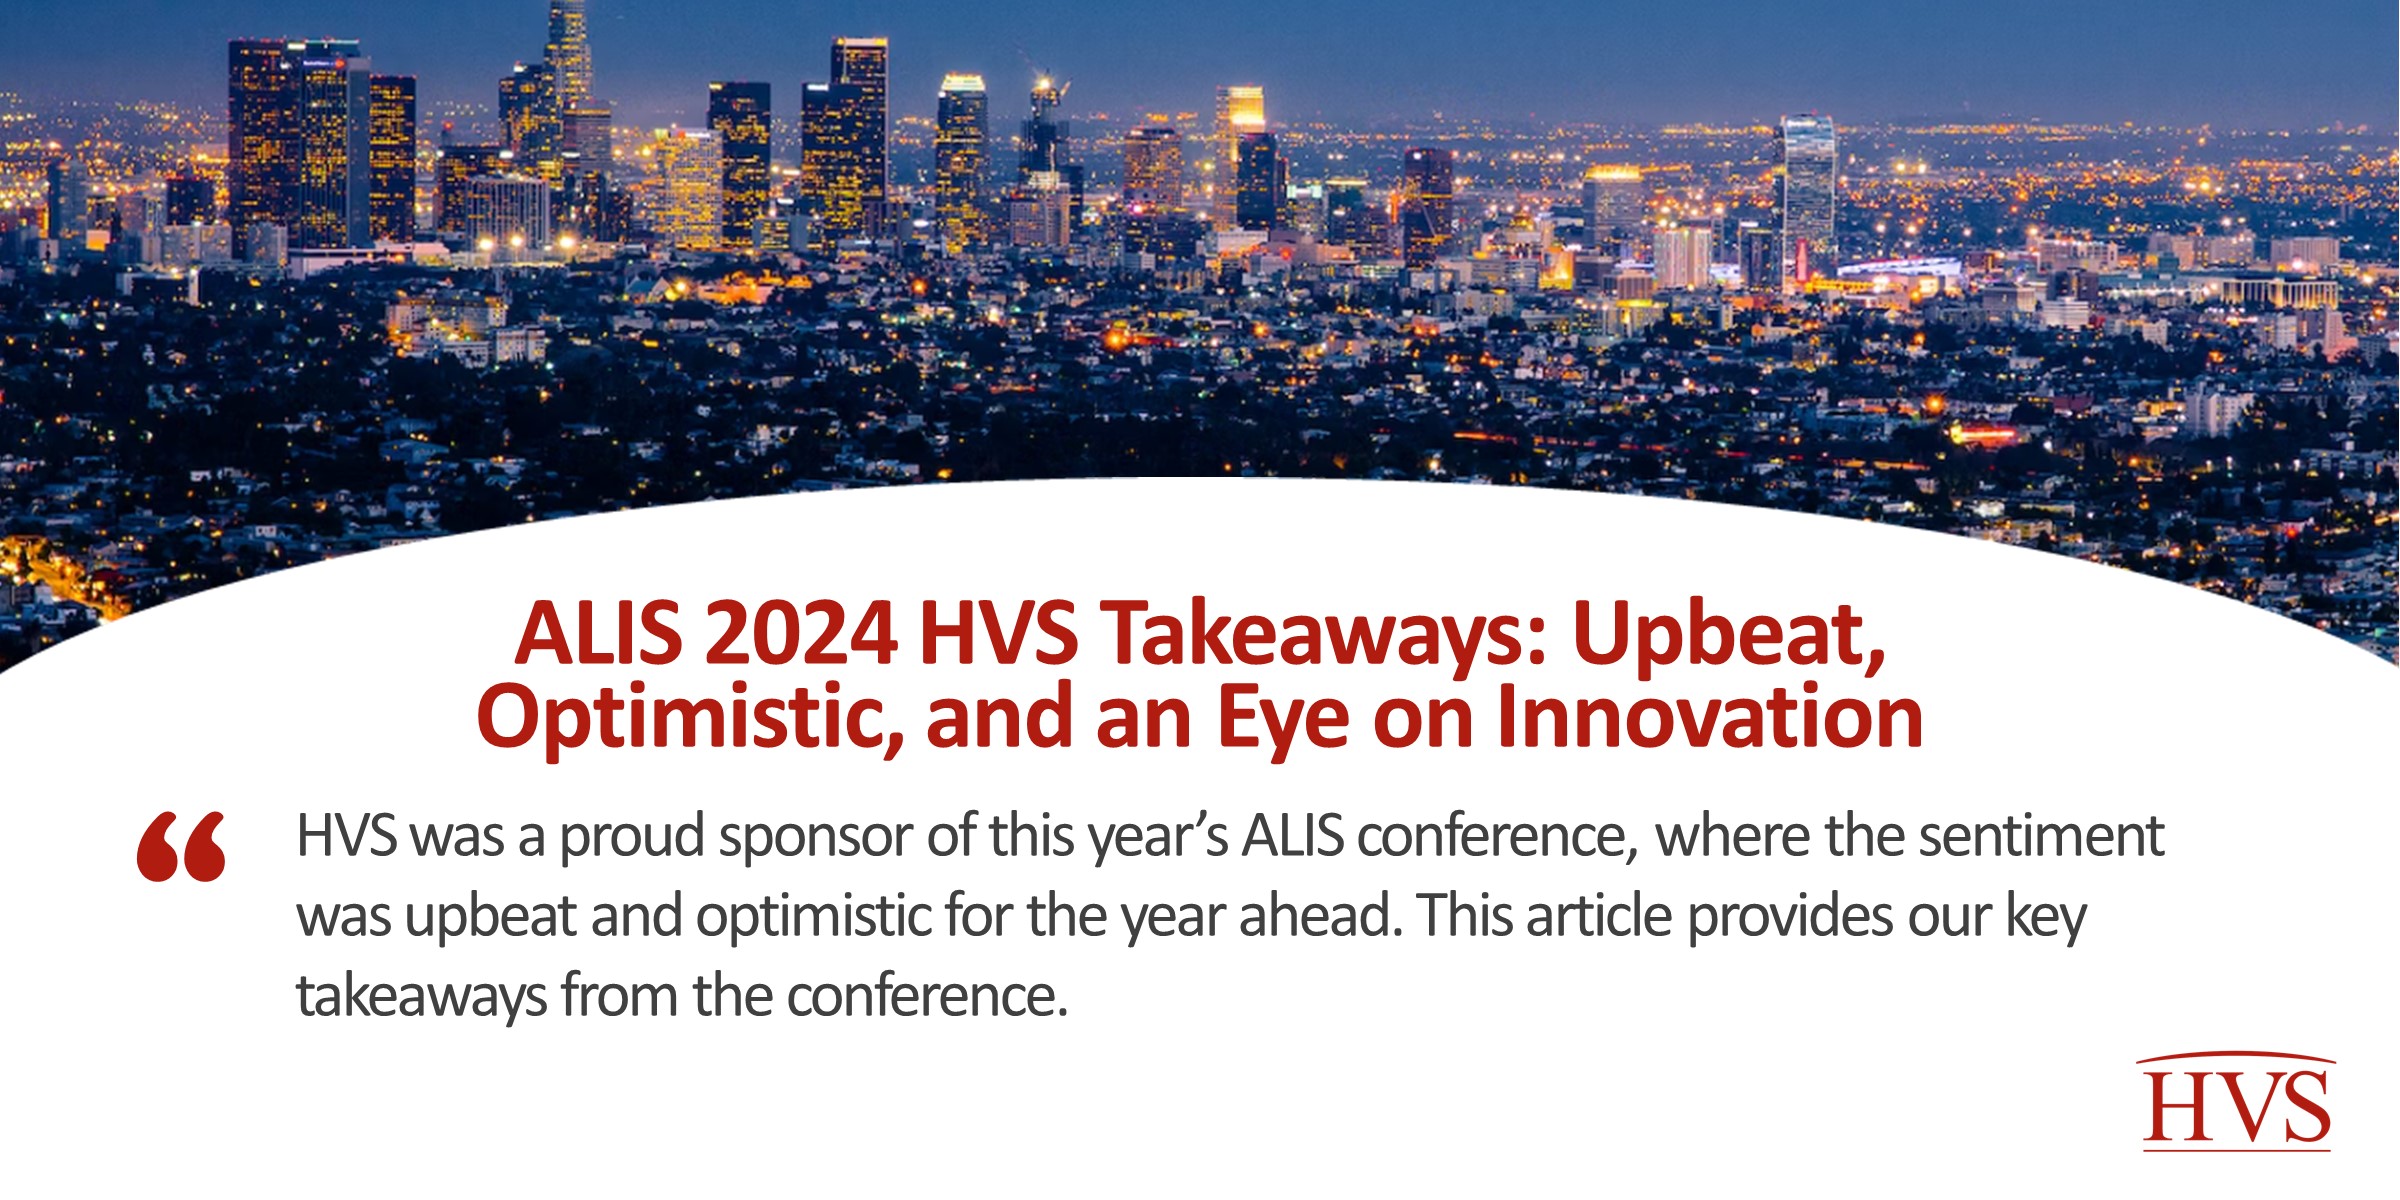 HVS ALIS 2024 HVS Takeaways Upbeat, Optimistic, and an Eye on Innovation